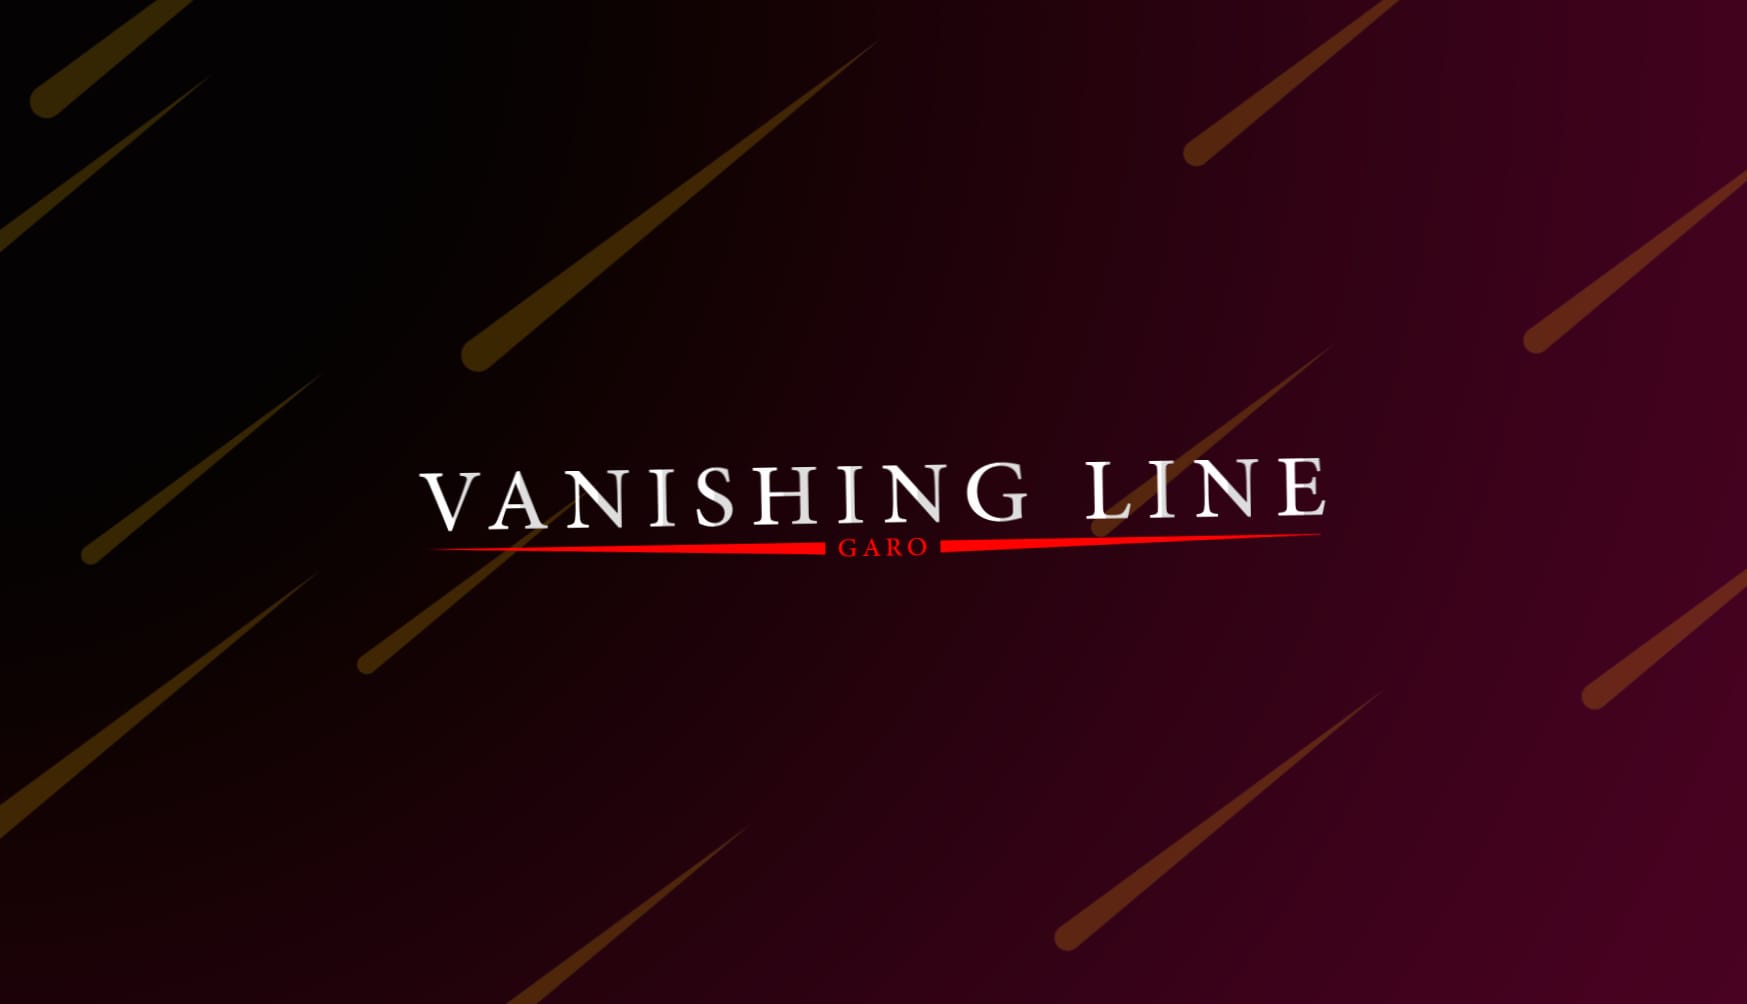 Garo Vanishing Line at 1600 x 1200 size wallpapers HD quality